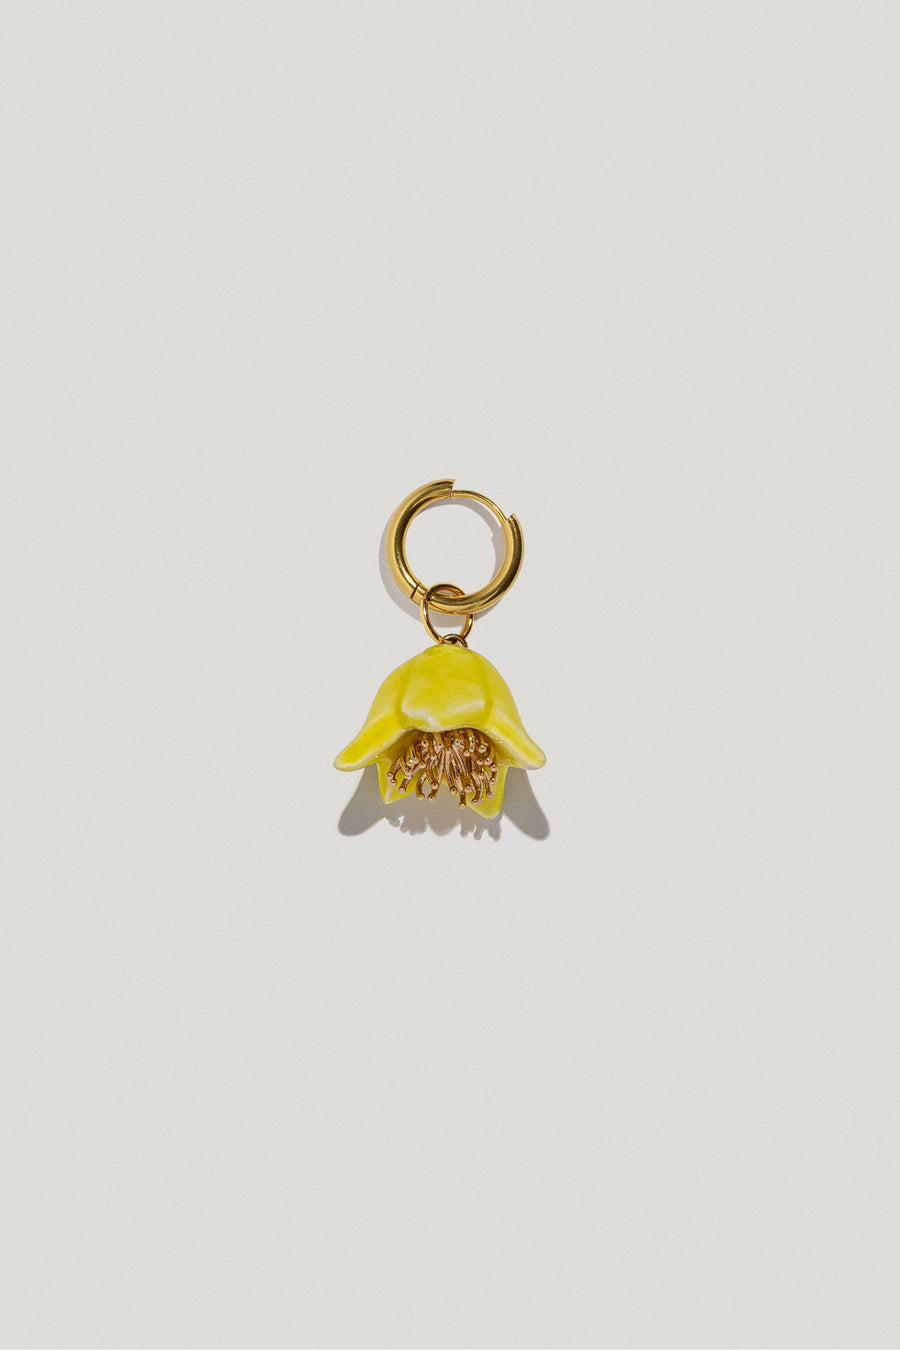 Polysk mono earring with yellow flower